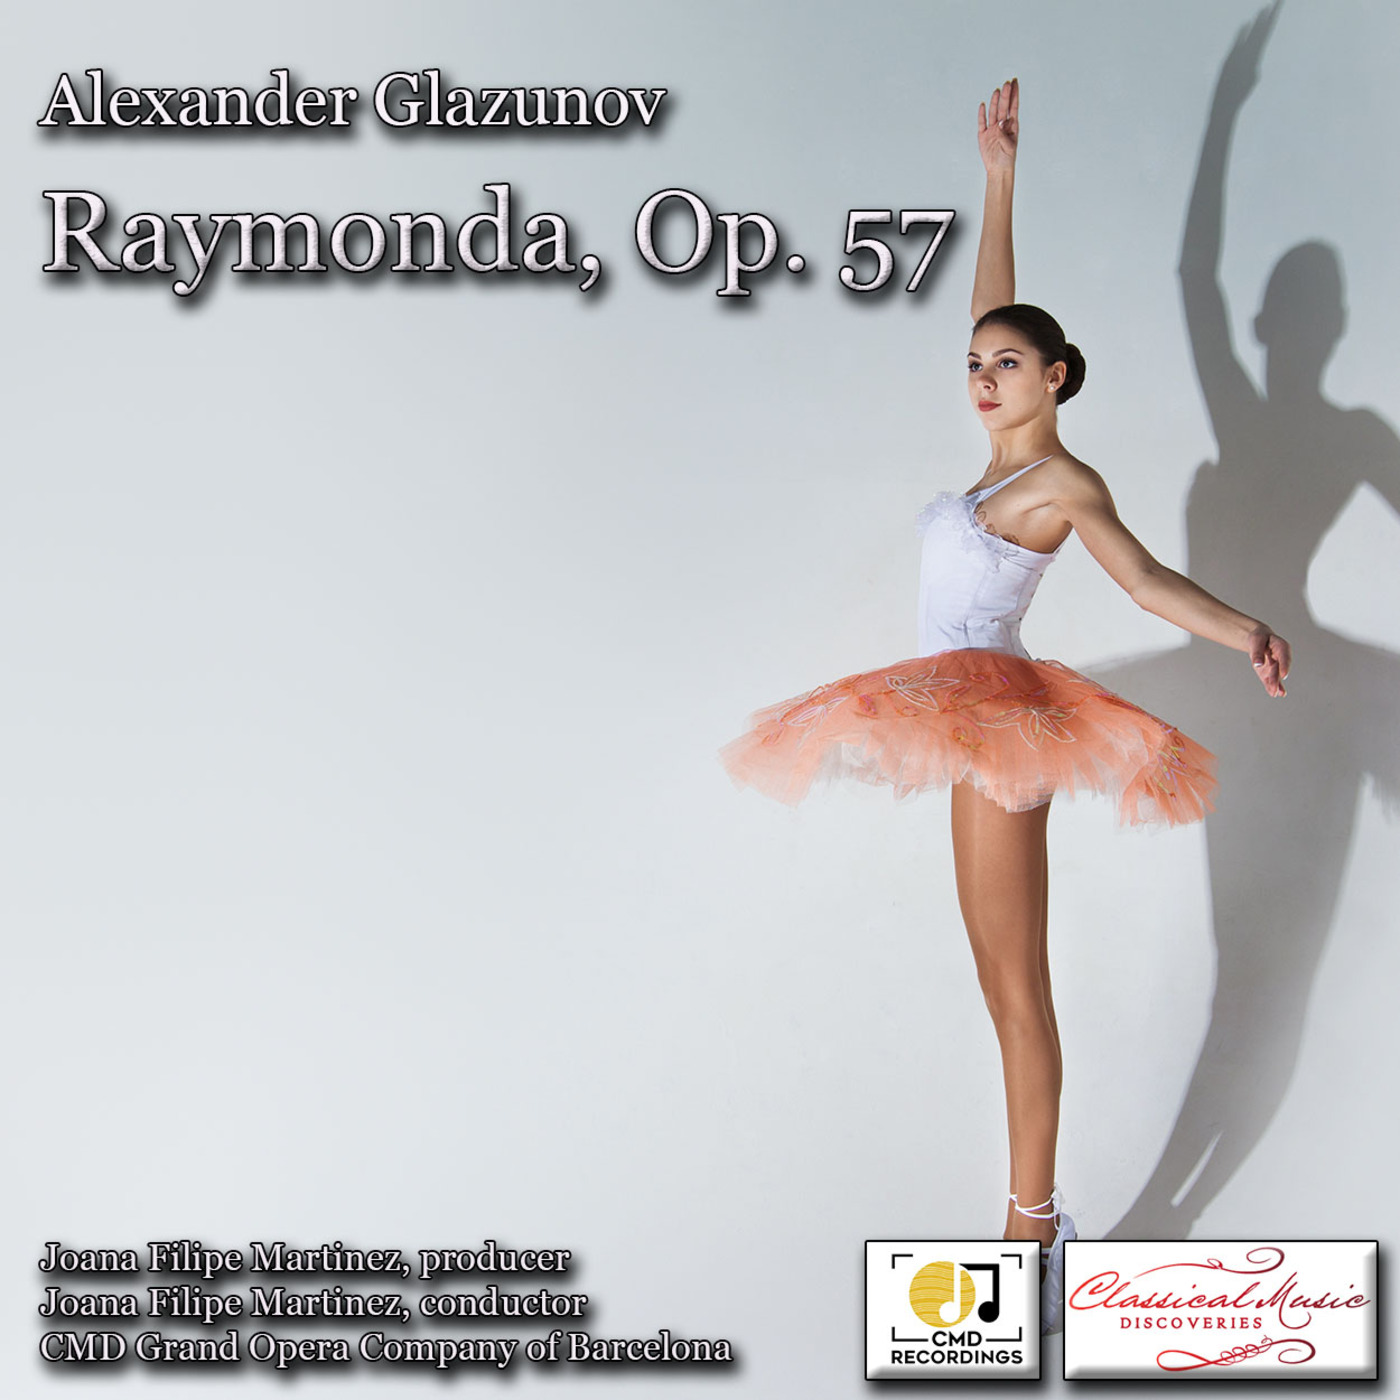 Episode 32: 17032 Glazunov: Raymonda, Op. 57